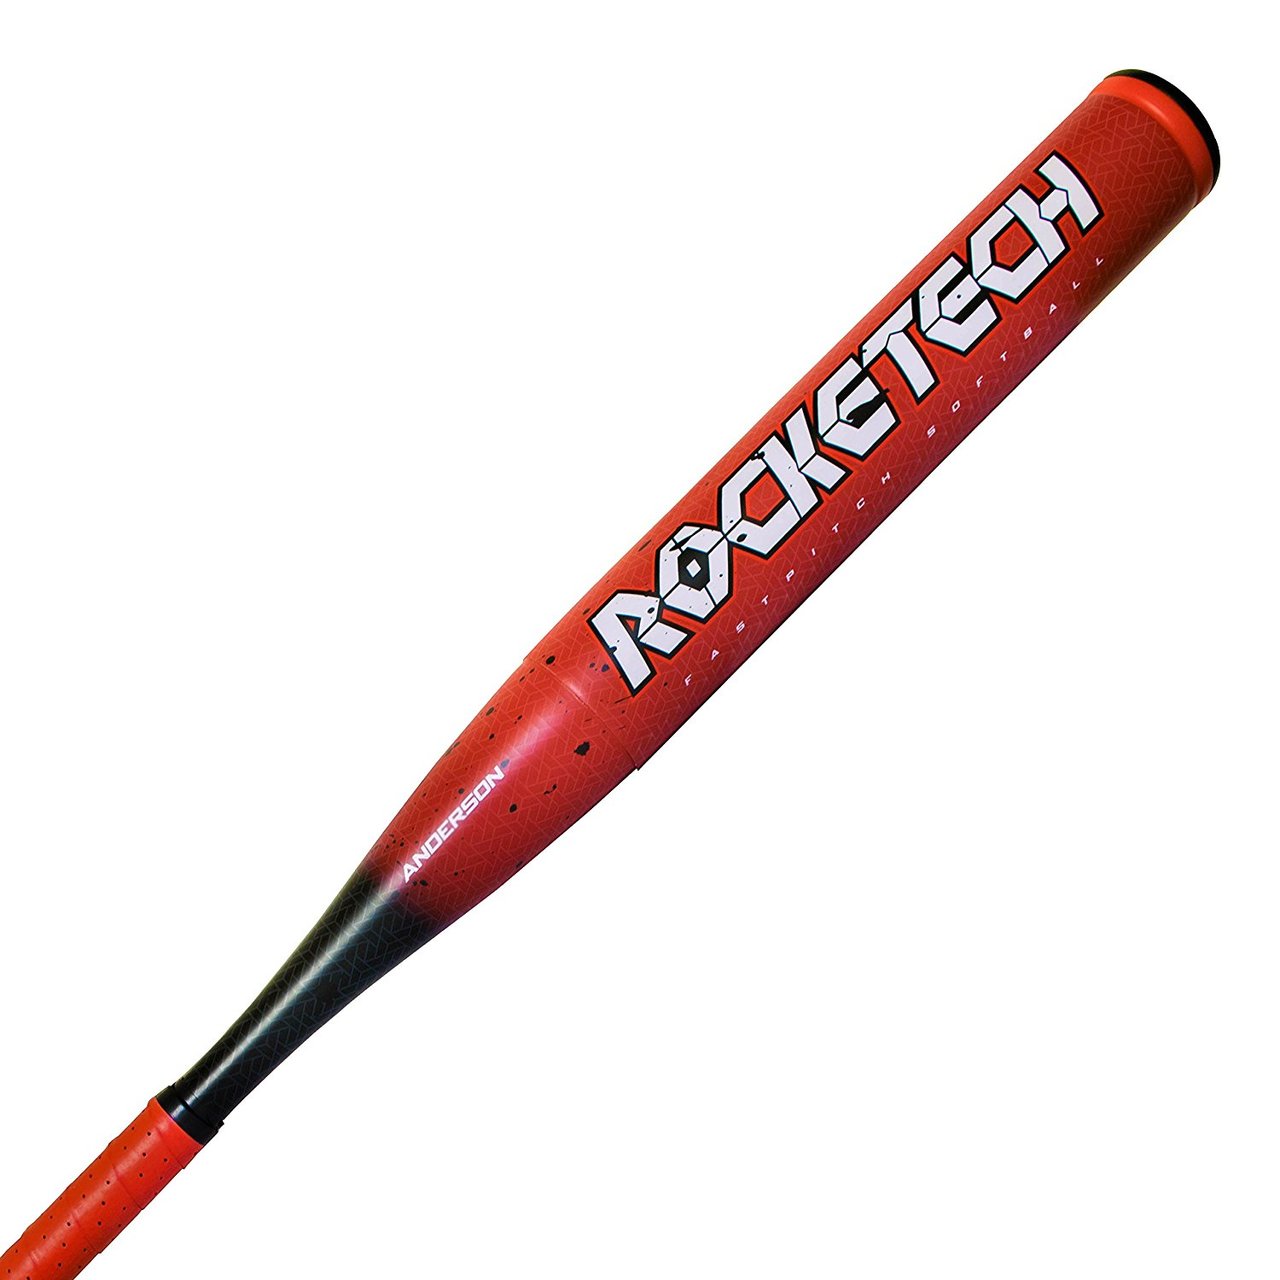 anderson-rocketech-2018-9-fastpitch-softball-bat-34-inch-25-oz 0170343425 Anderson 874147008423 <span>The <strong>2018 Rocketech -9 </strong>Fast Pitch Softball Bat is Virtually Bulletproof!